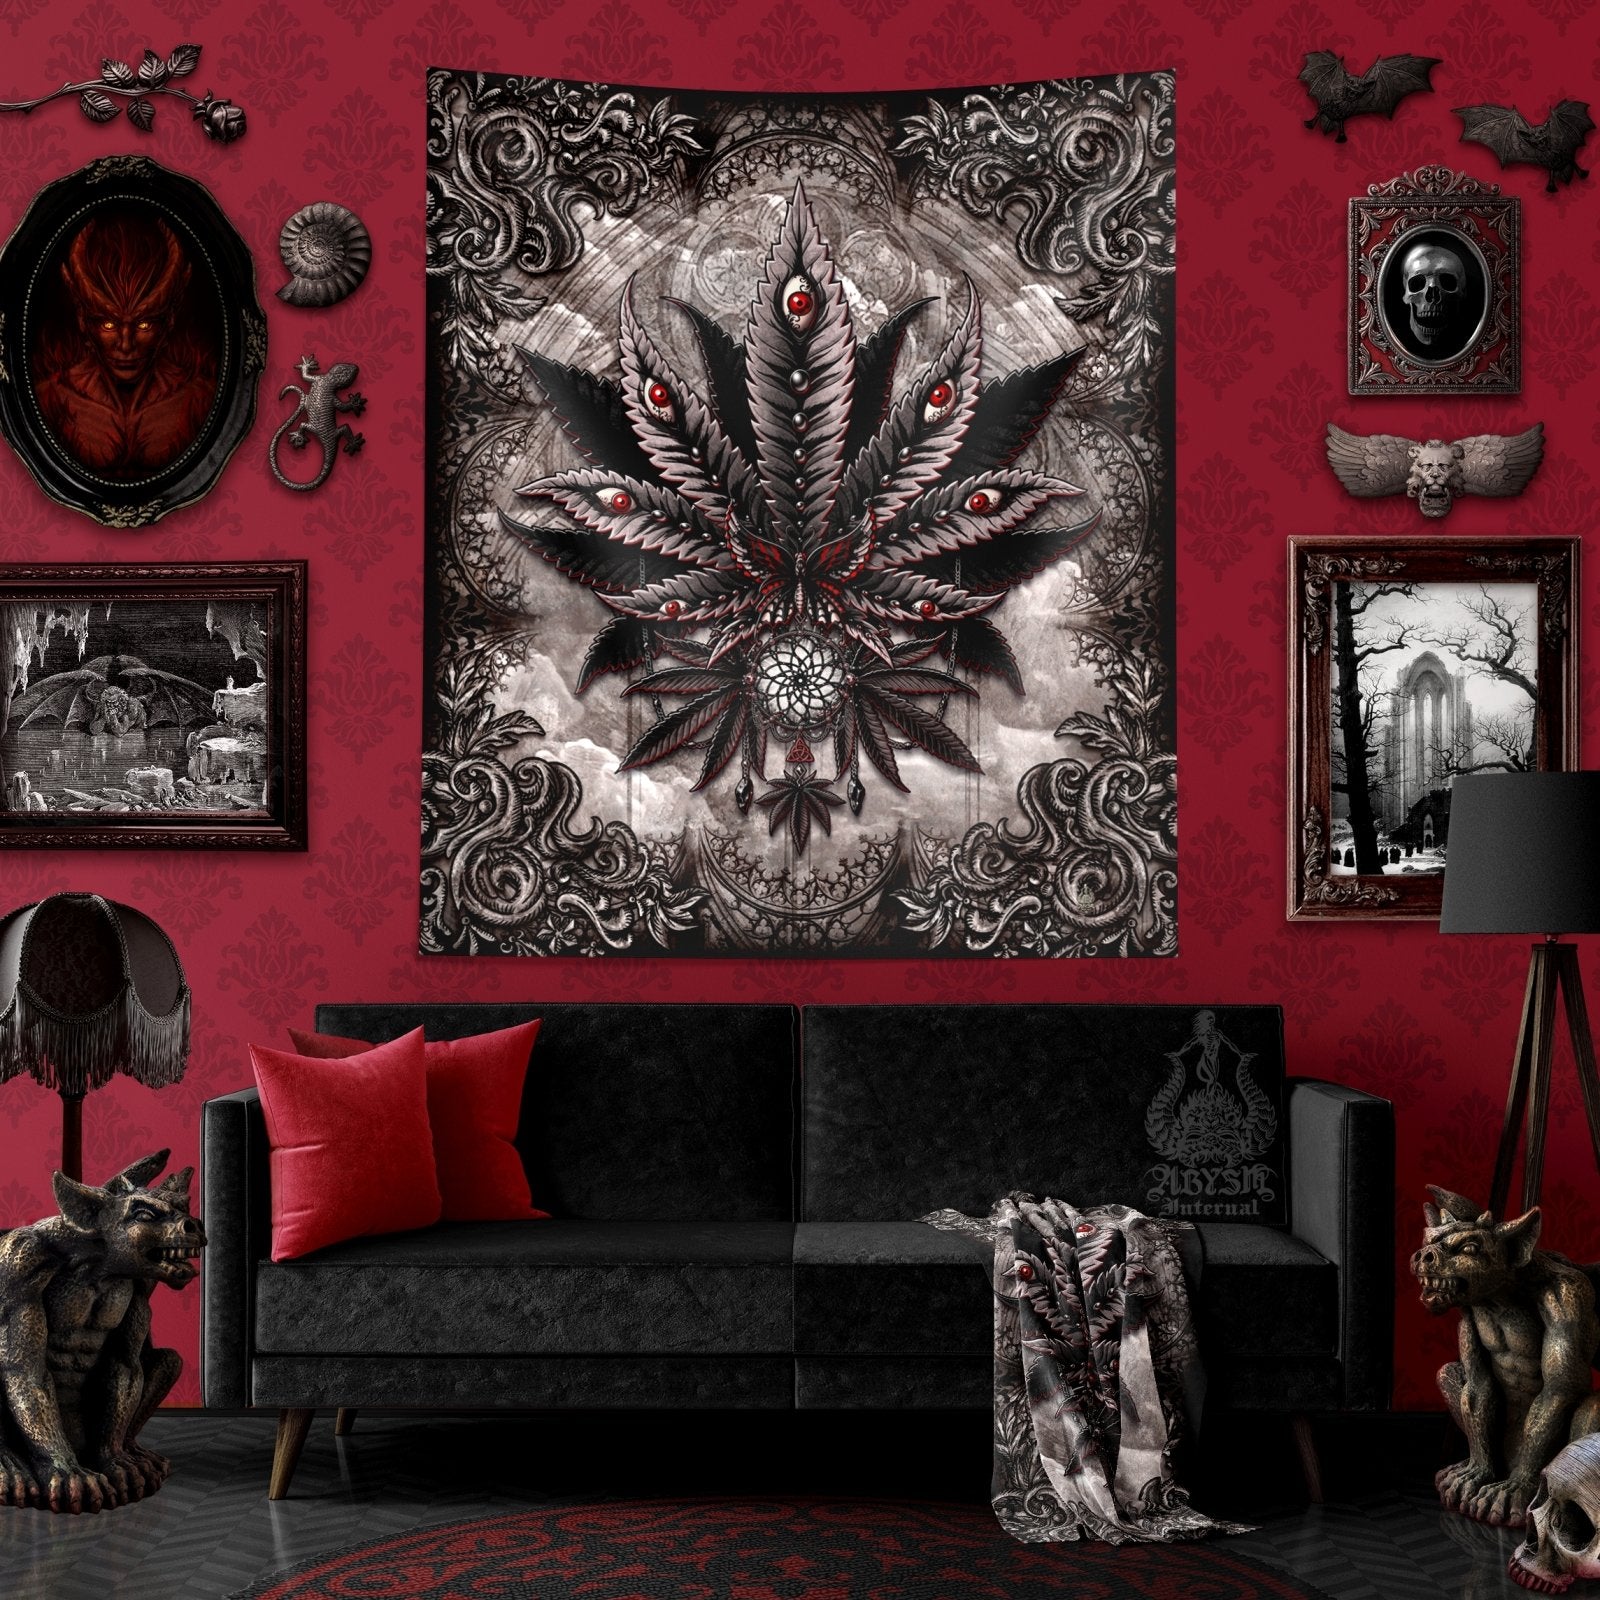 Gothic Weed Tapestry, Cannabis Shop Decor, Marijuana Wall Hanging, Goth Home Decor, Art Print, 420 Gift - Horror Grey - Abysm Internal